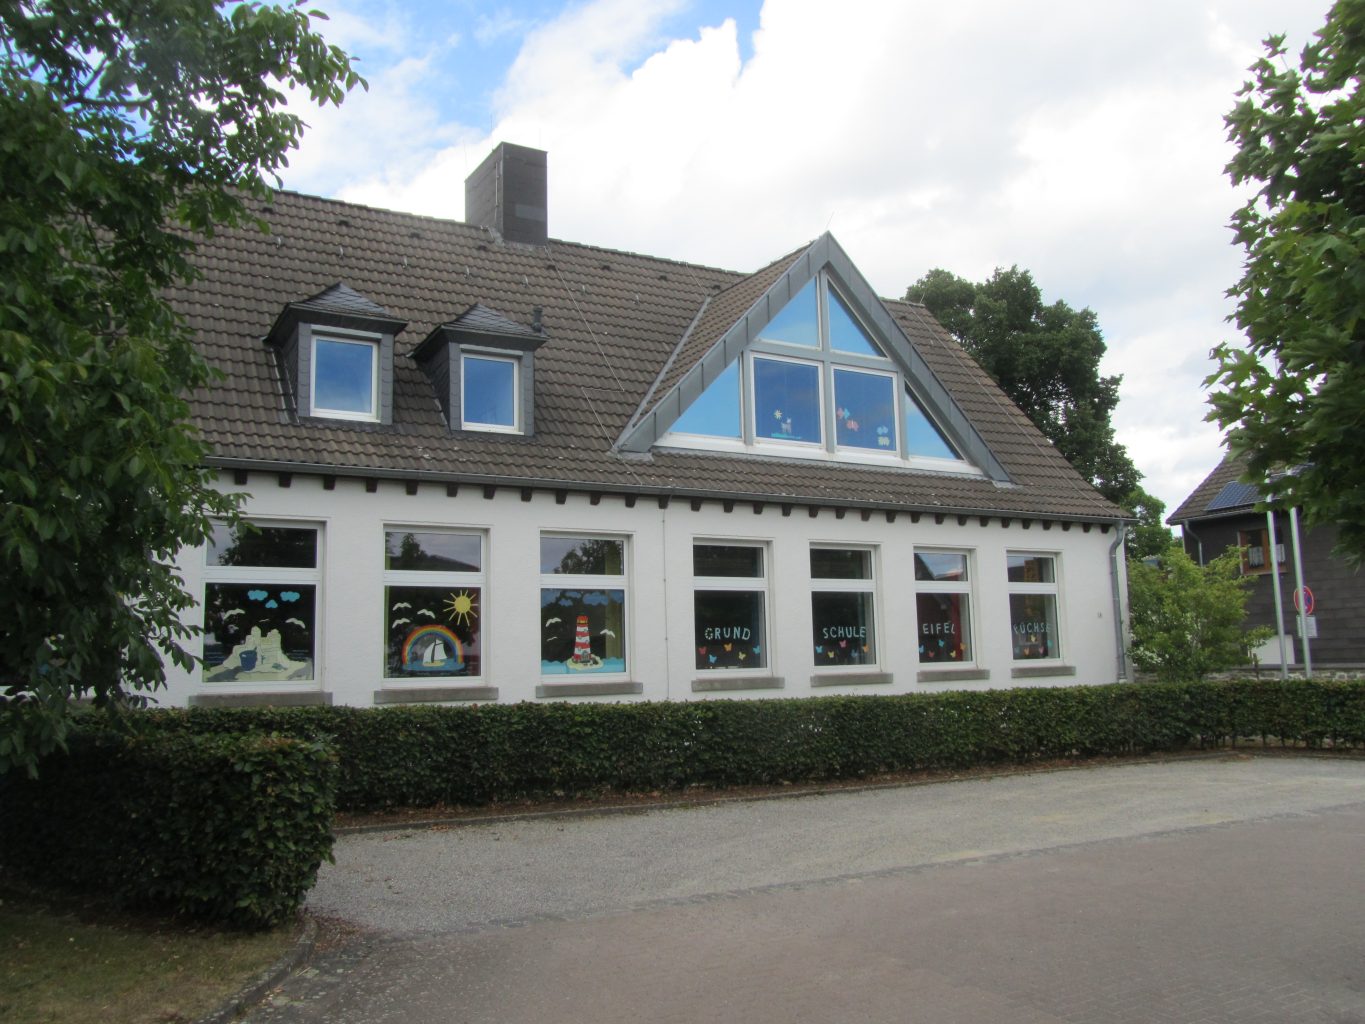 Grundschule Eifel-Füchse Vossenack